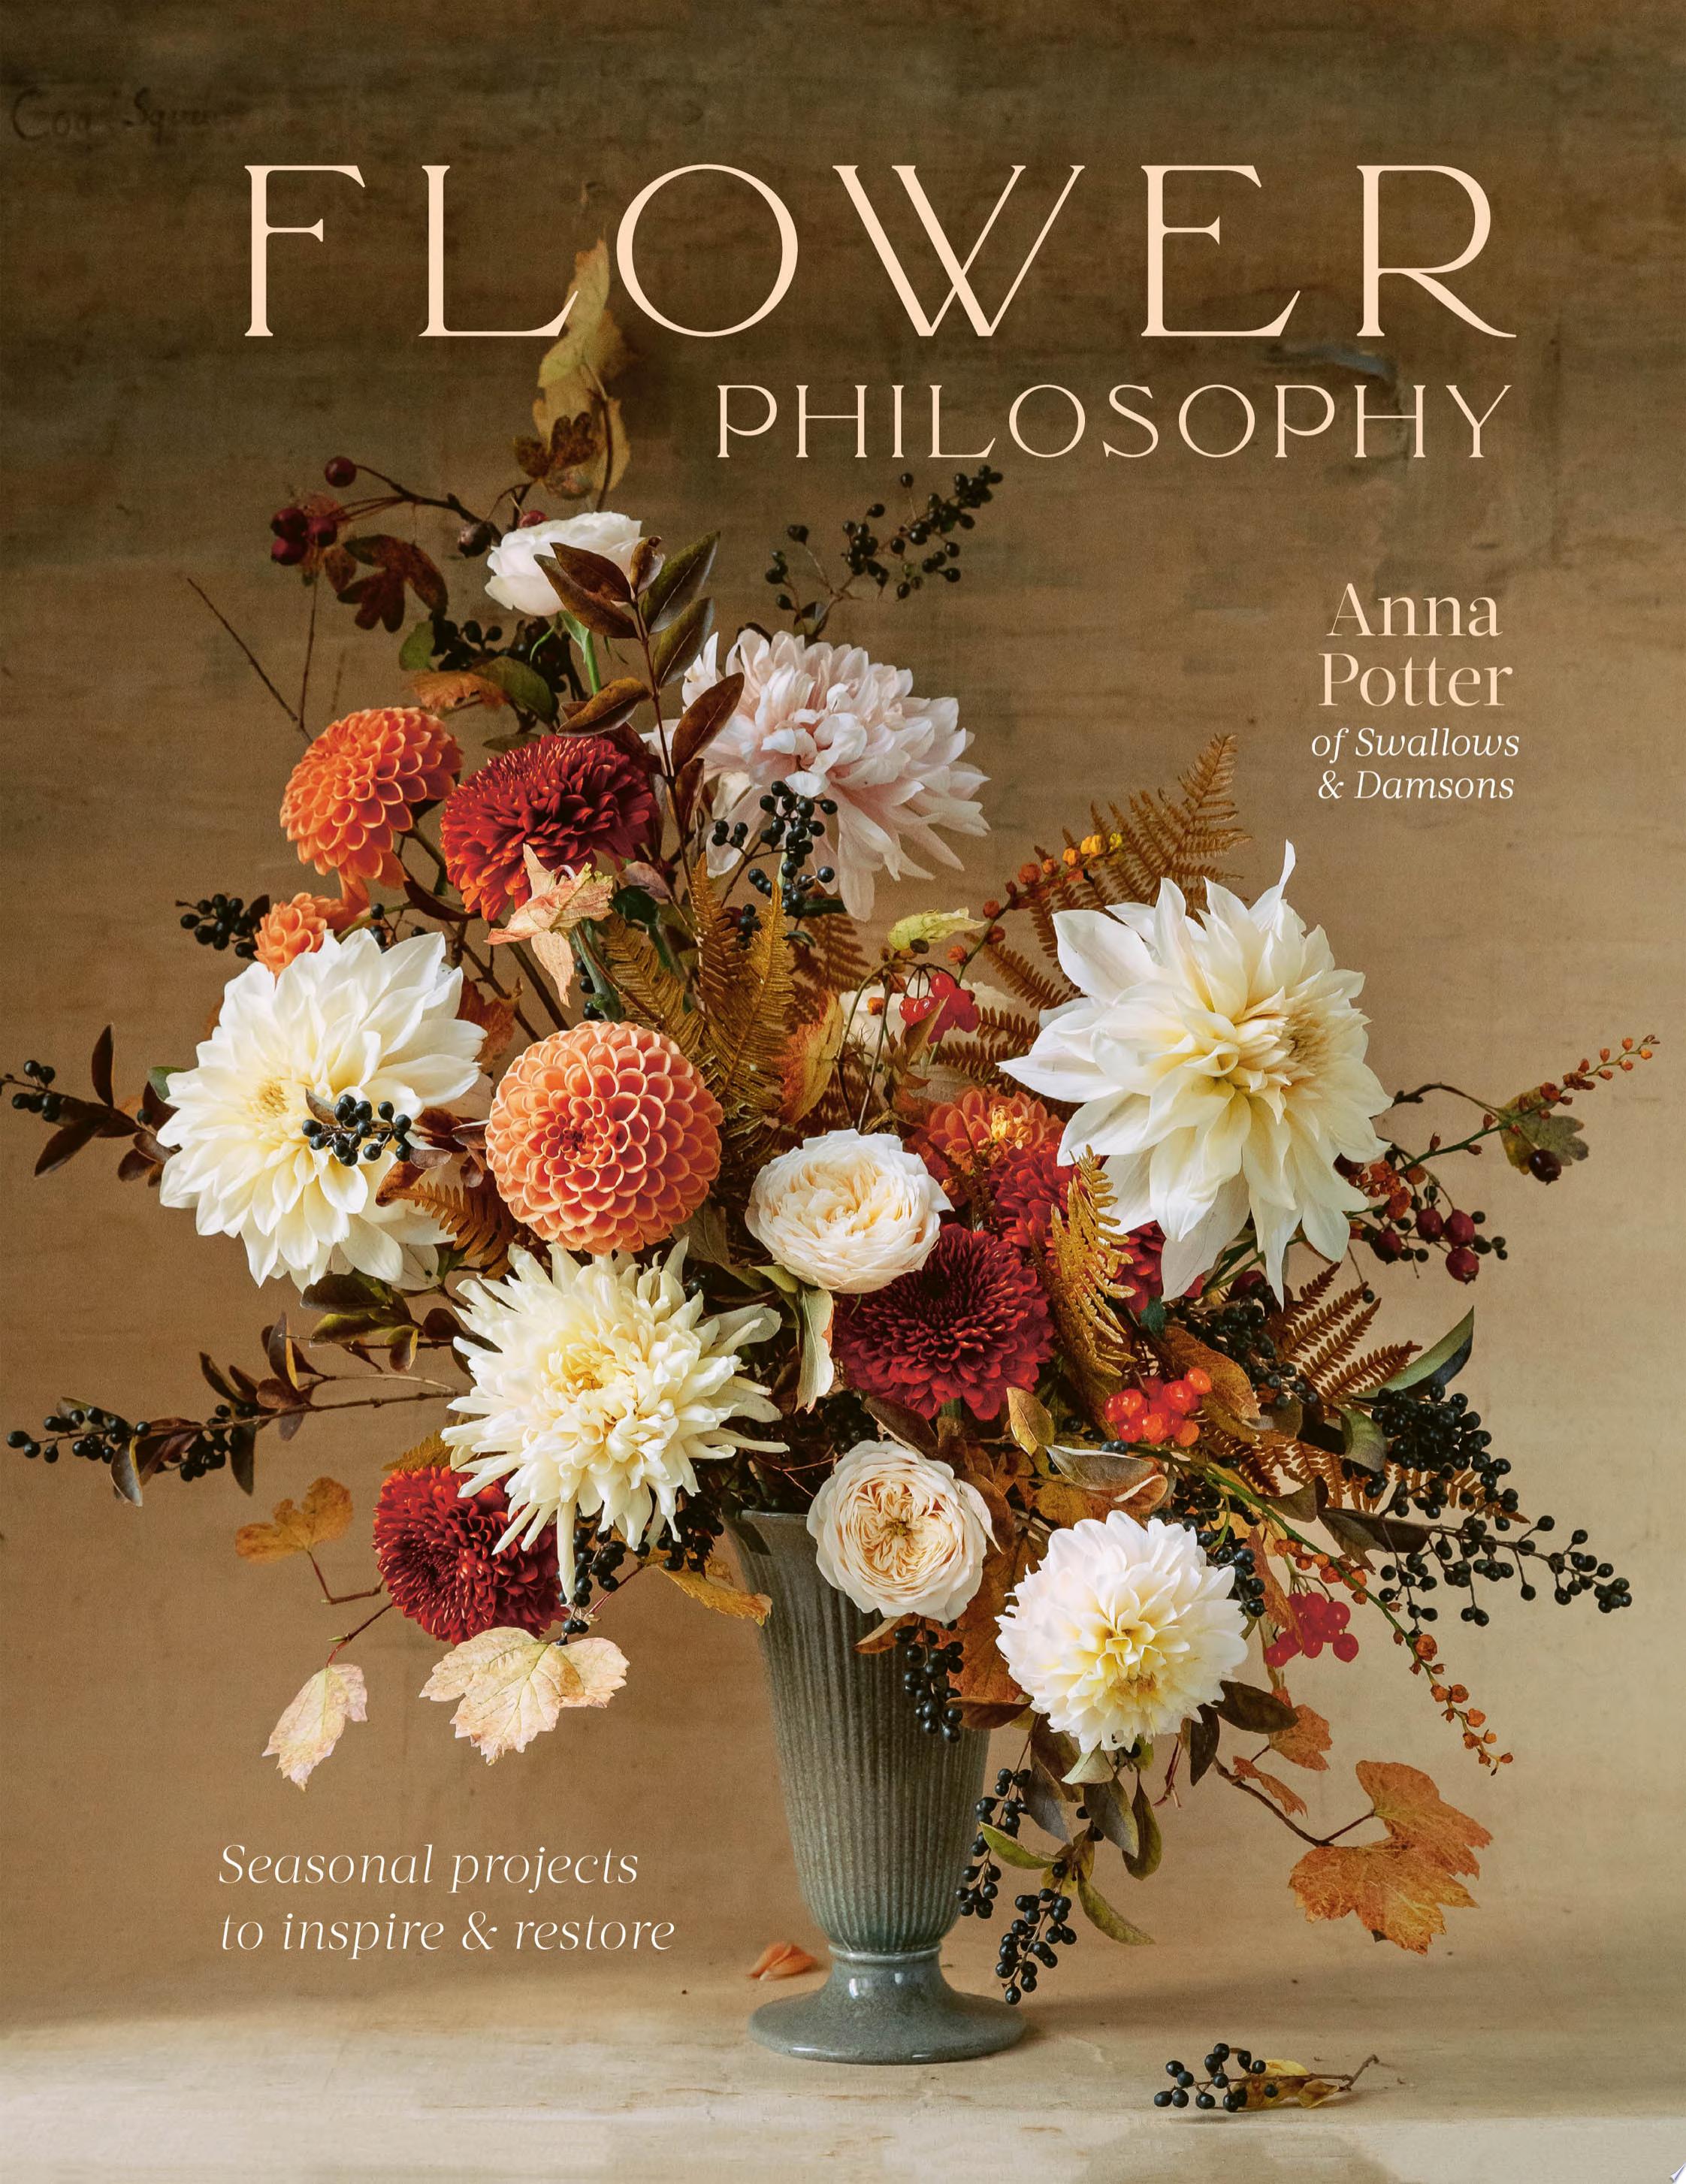 Image for "Flower Philosophy"